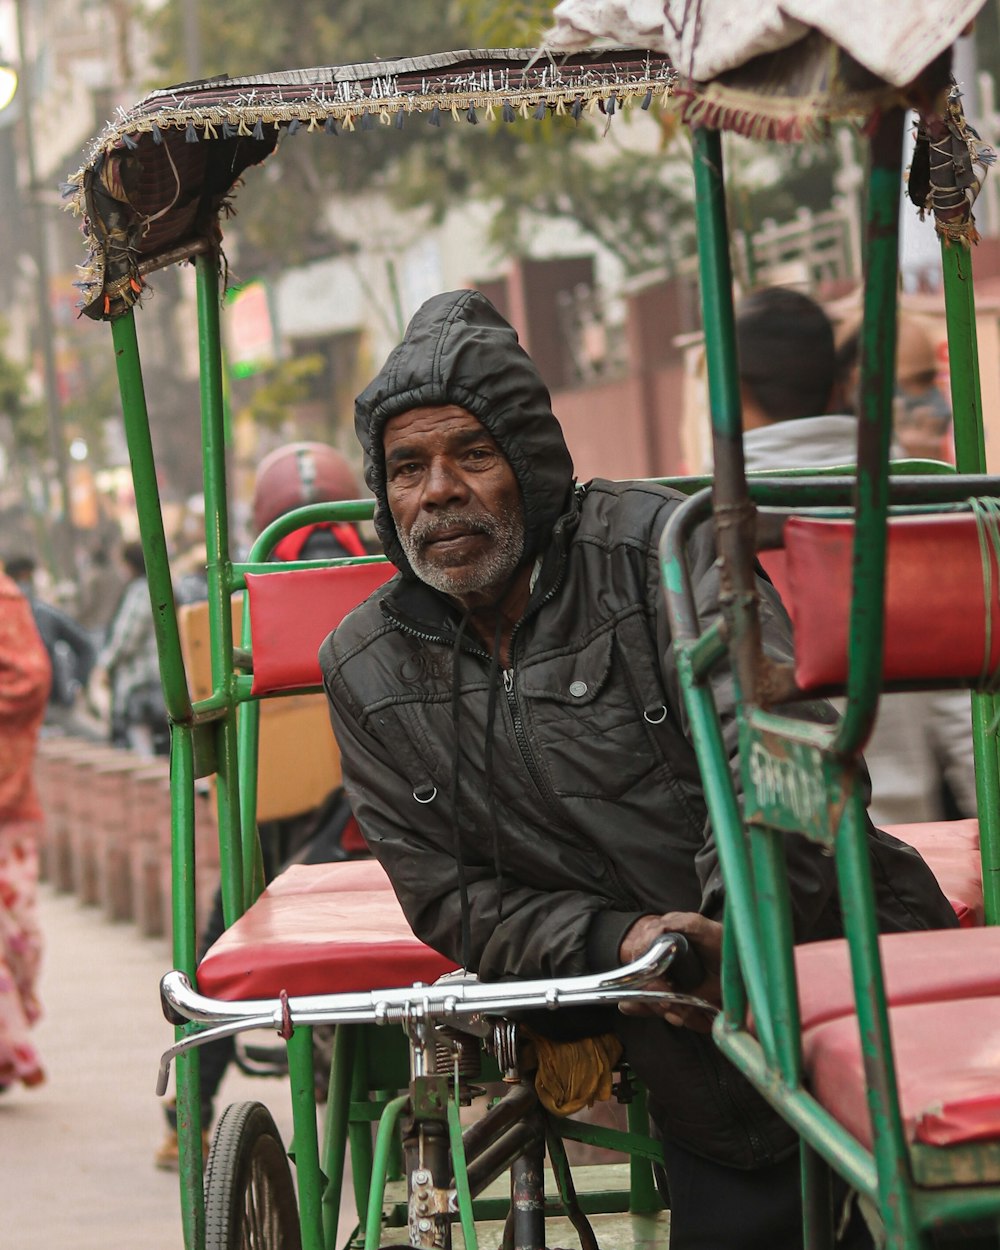 a man in a black jacket is riding a rickshaw